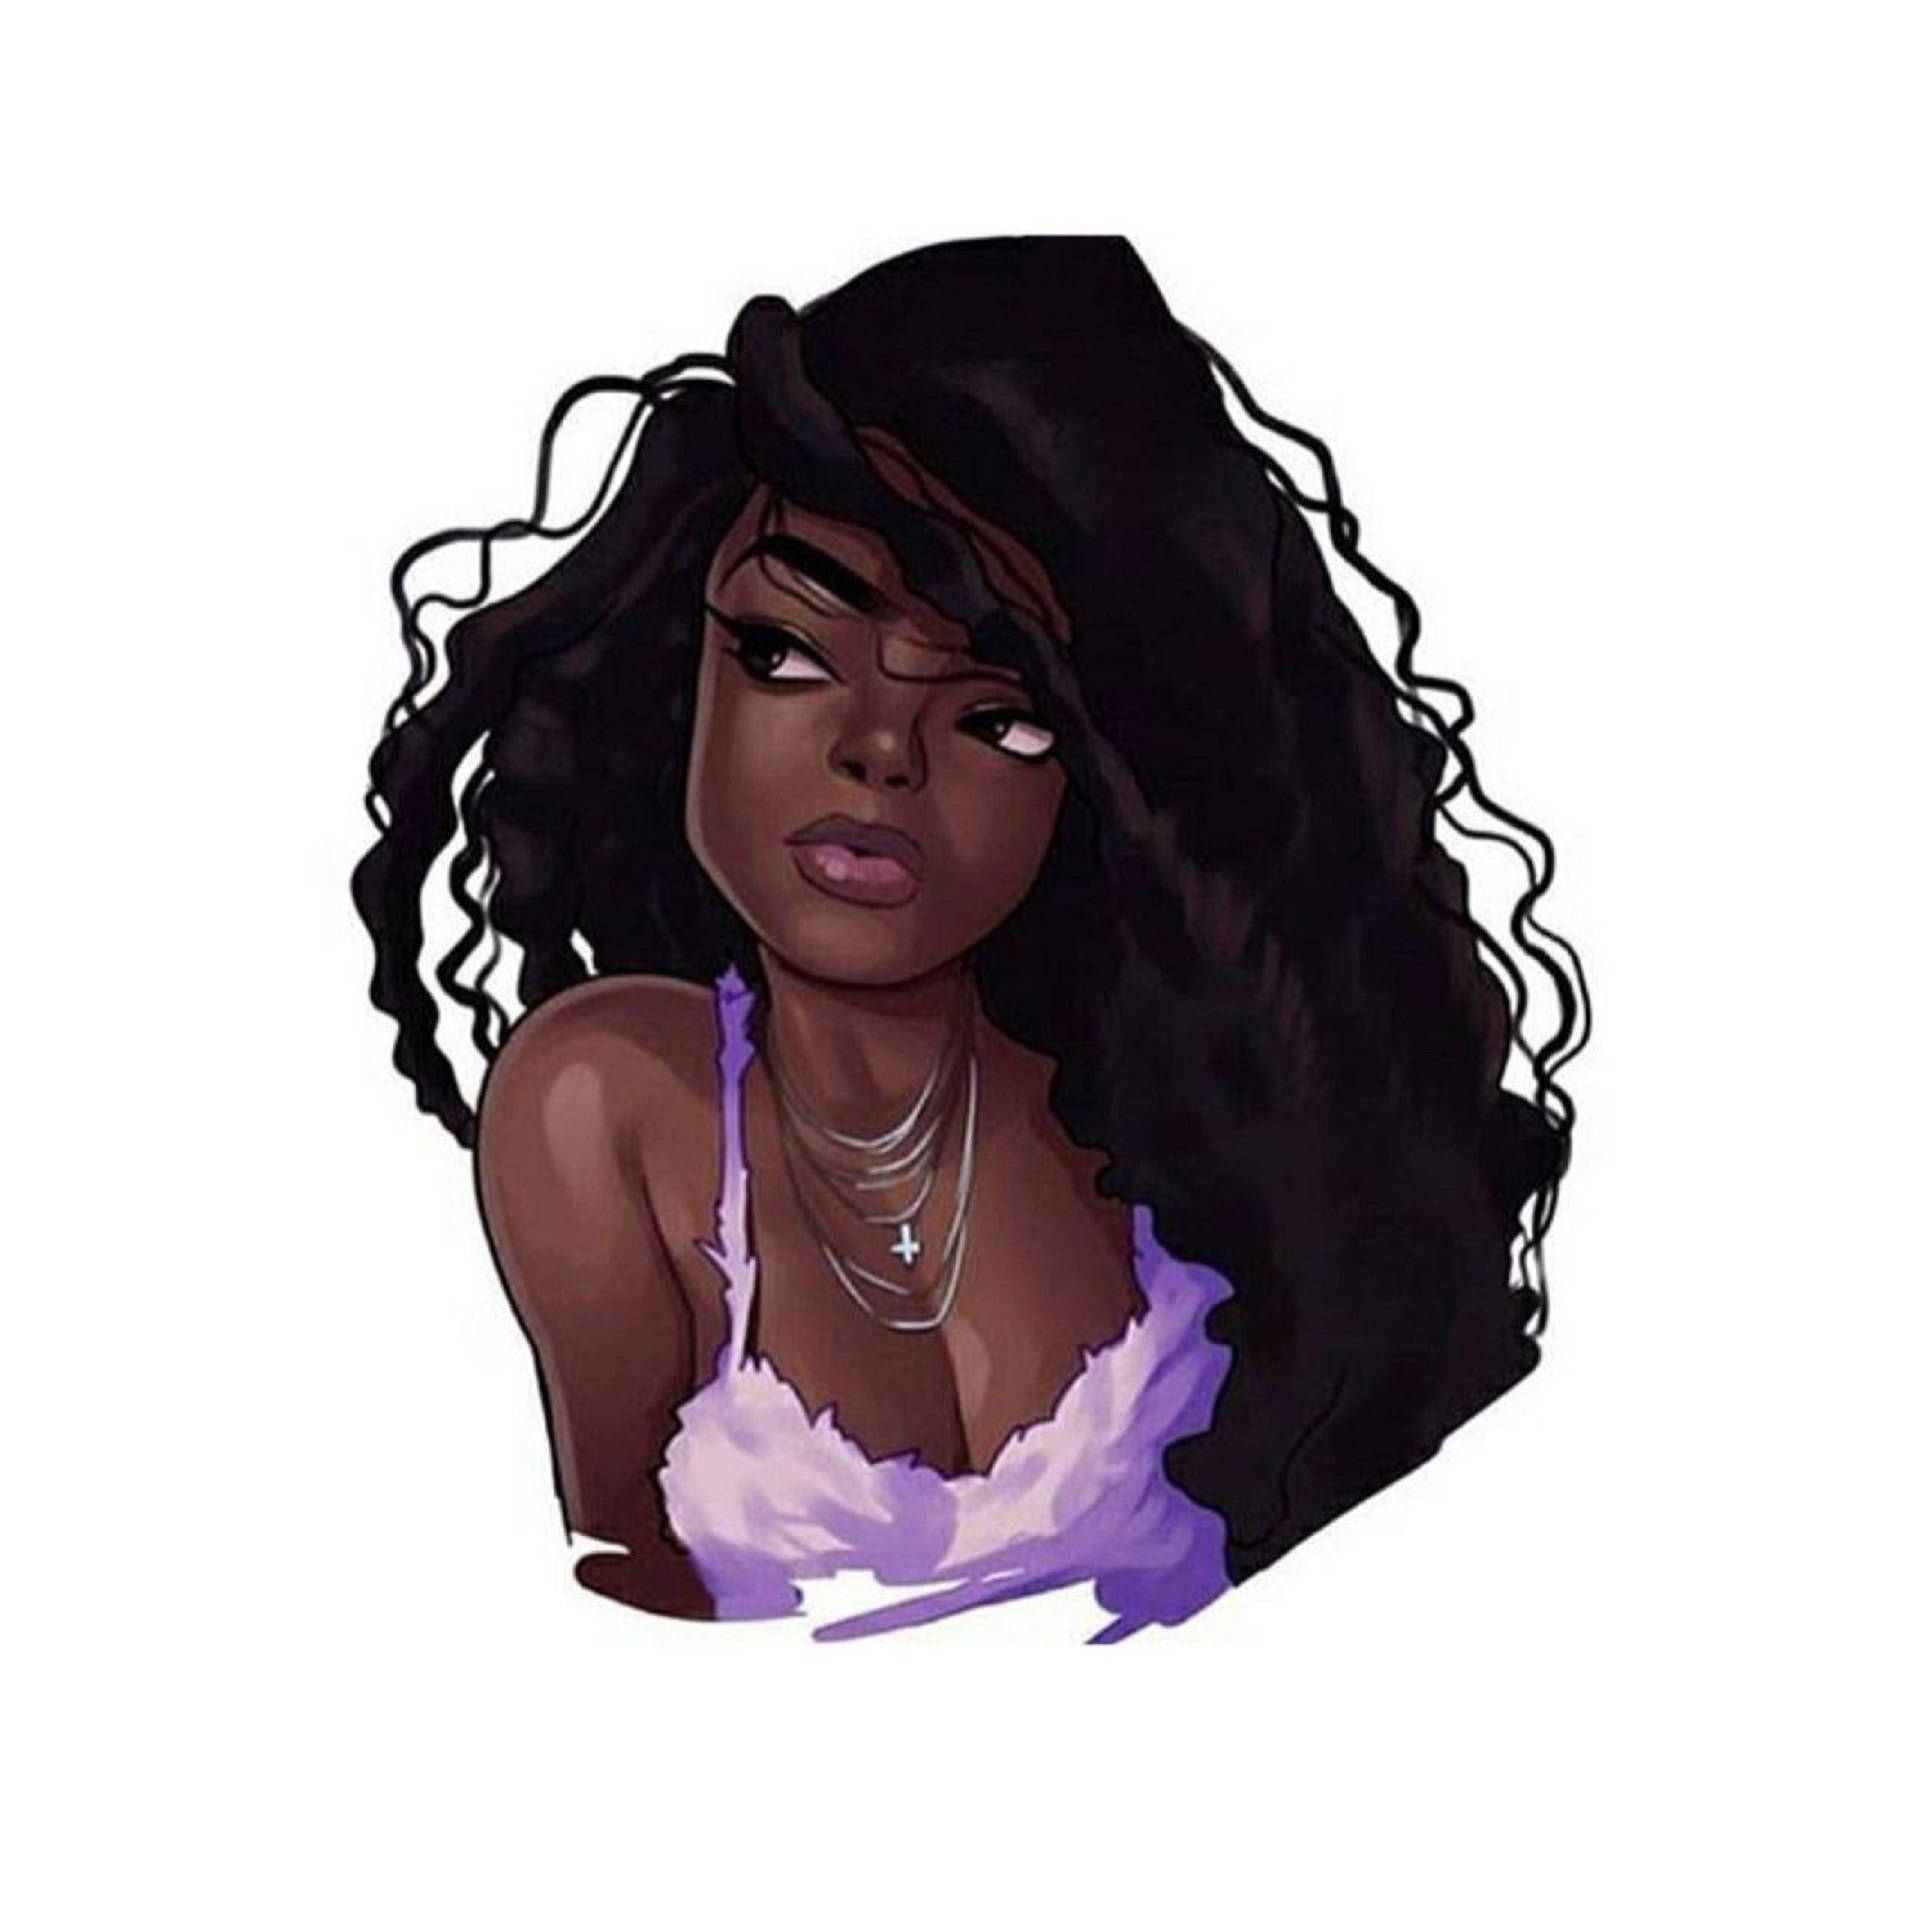 Free Cute Black Girls Wallpaper Downloads, [100+] Cute Black Girls  Wallpapers for FREE 